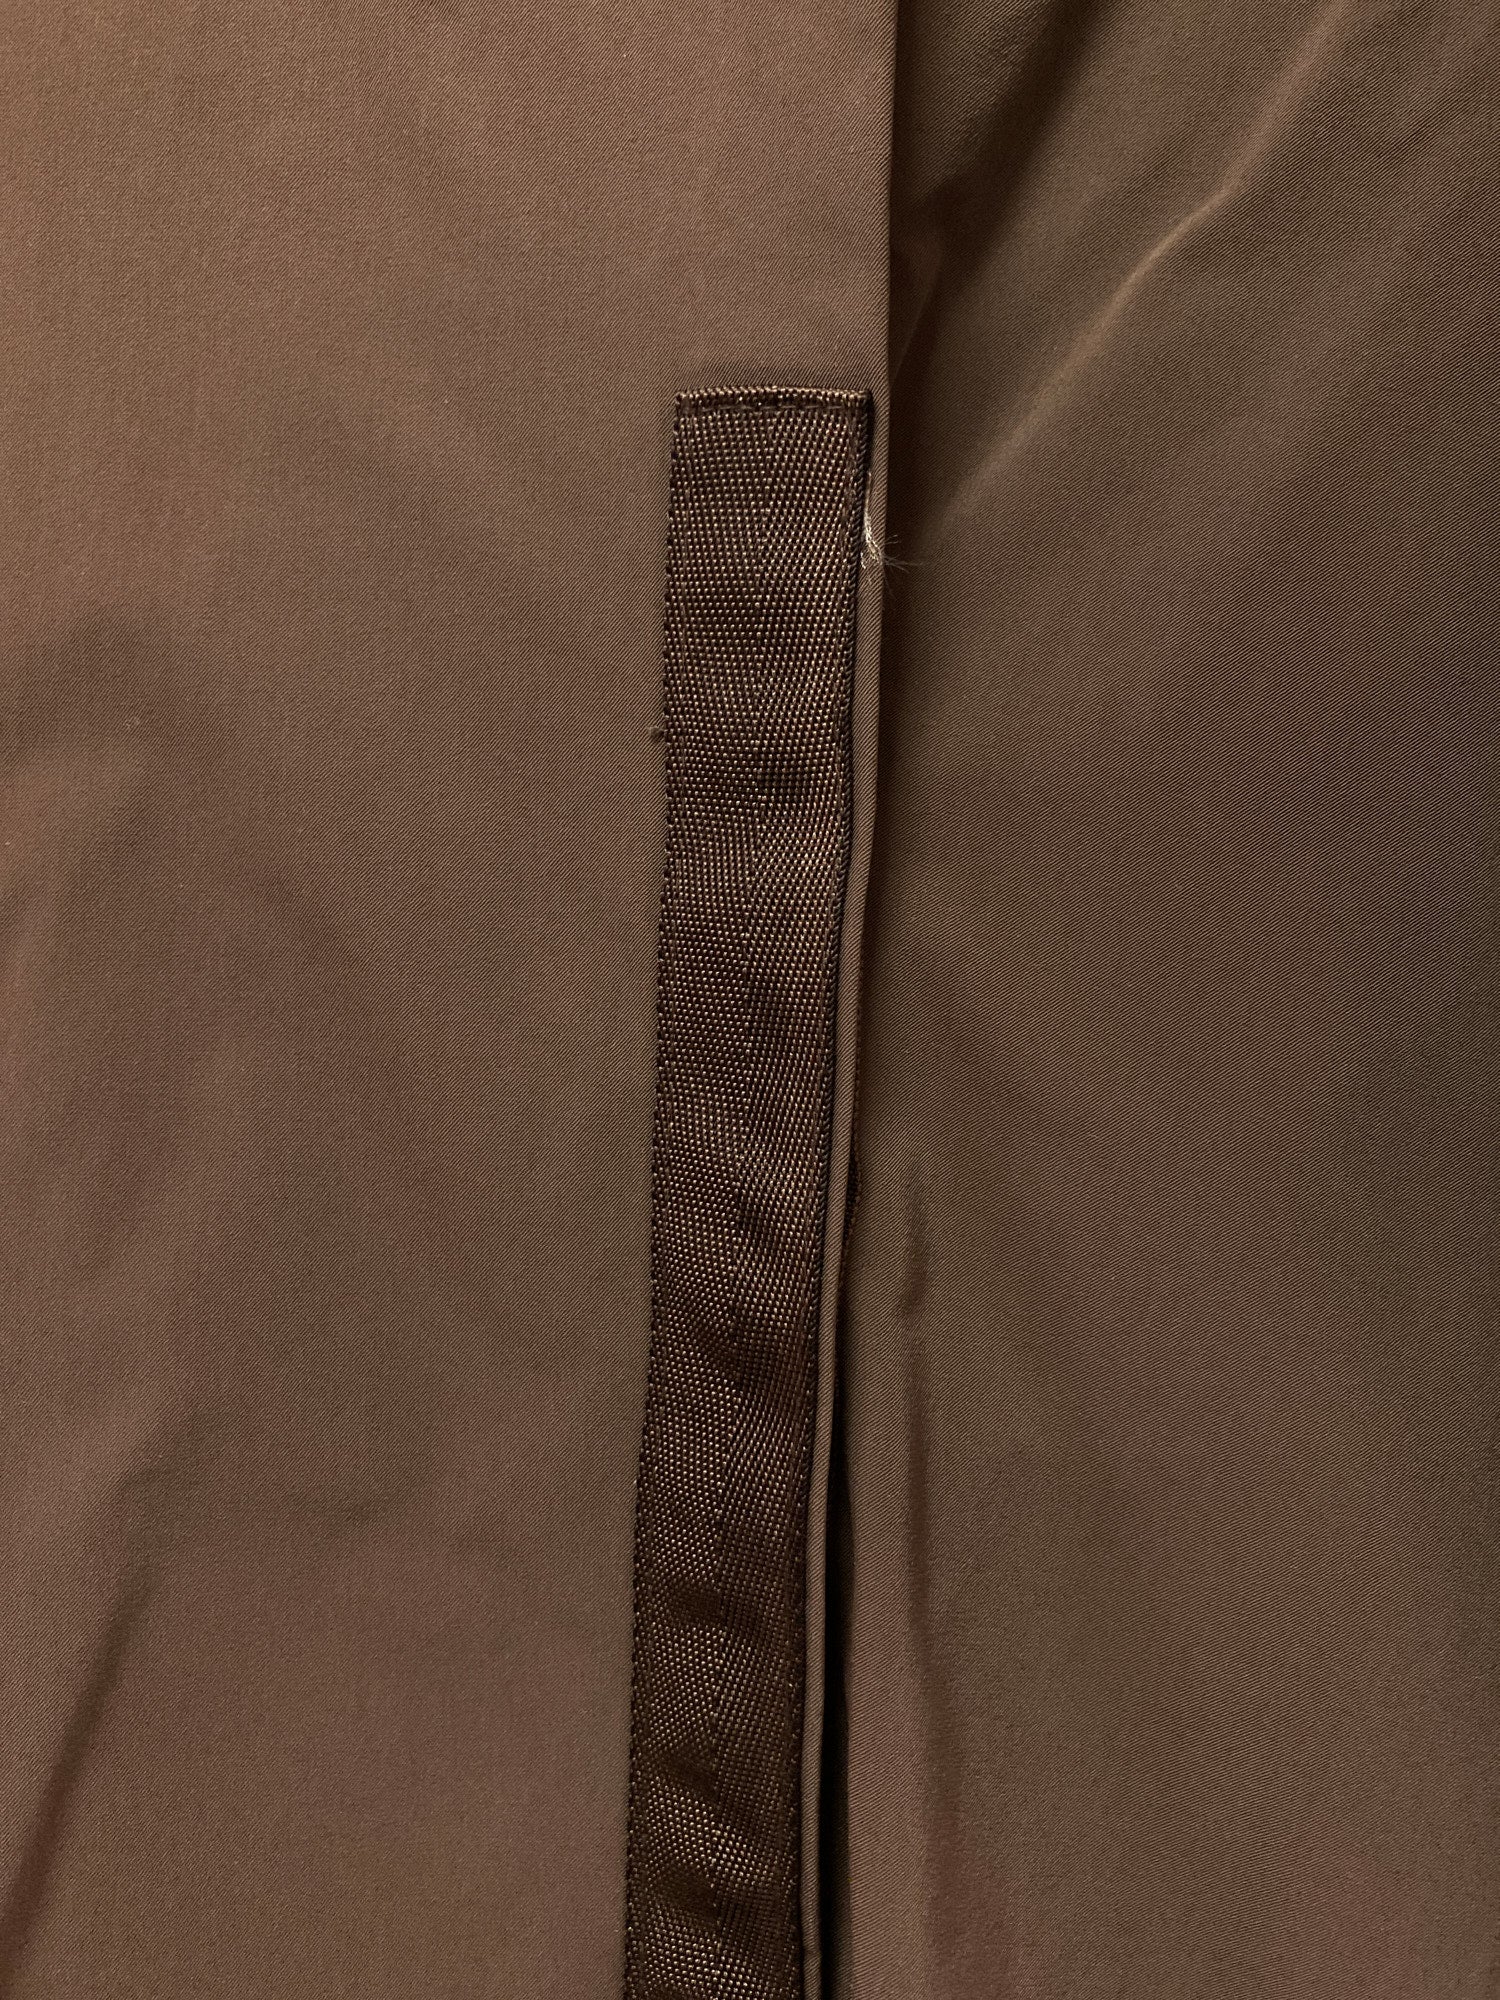 Issey Miyake brown press stud detail brown v neck tunic dress - size 2 JP M S